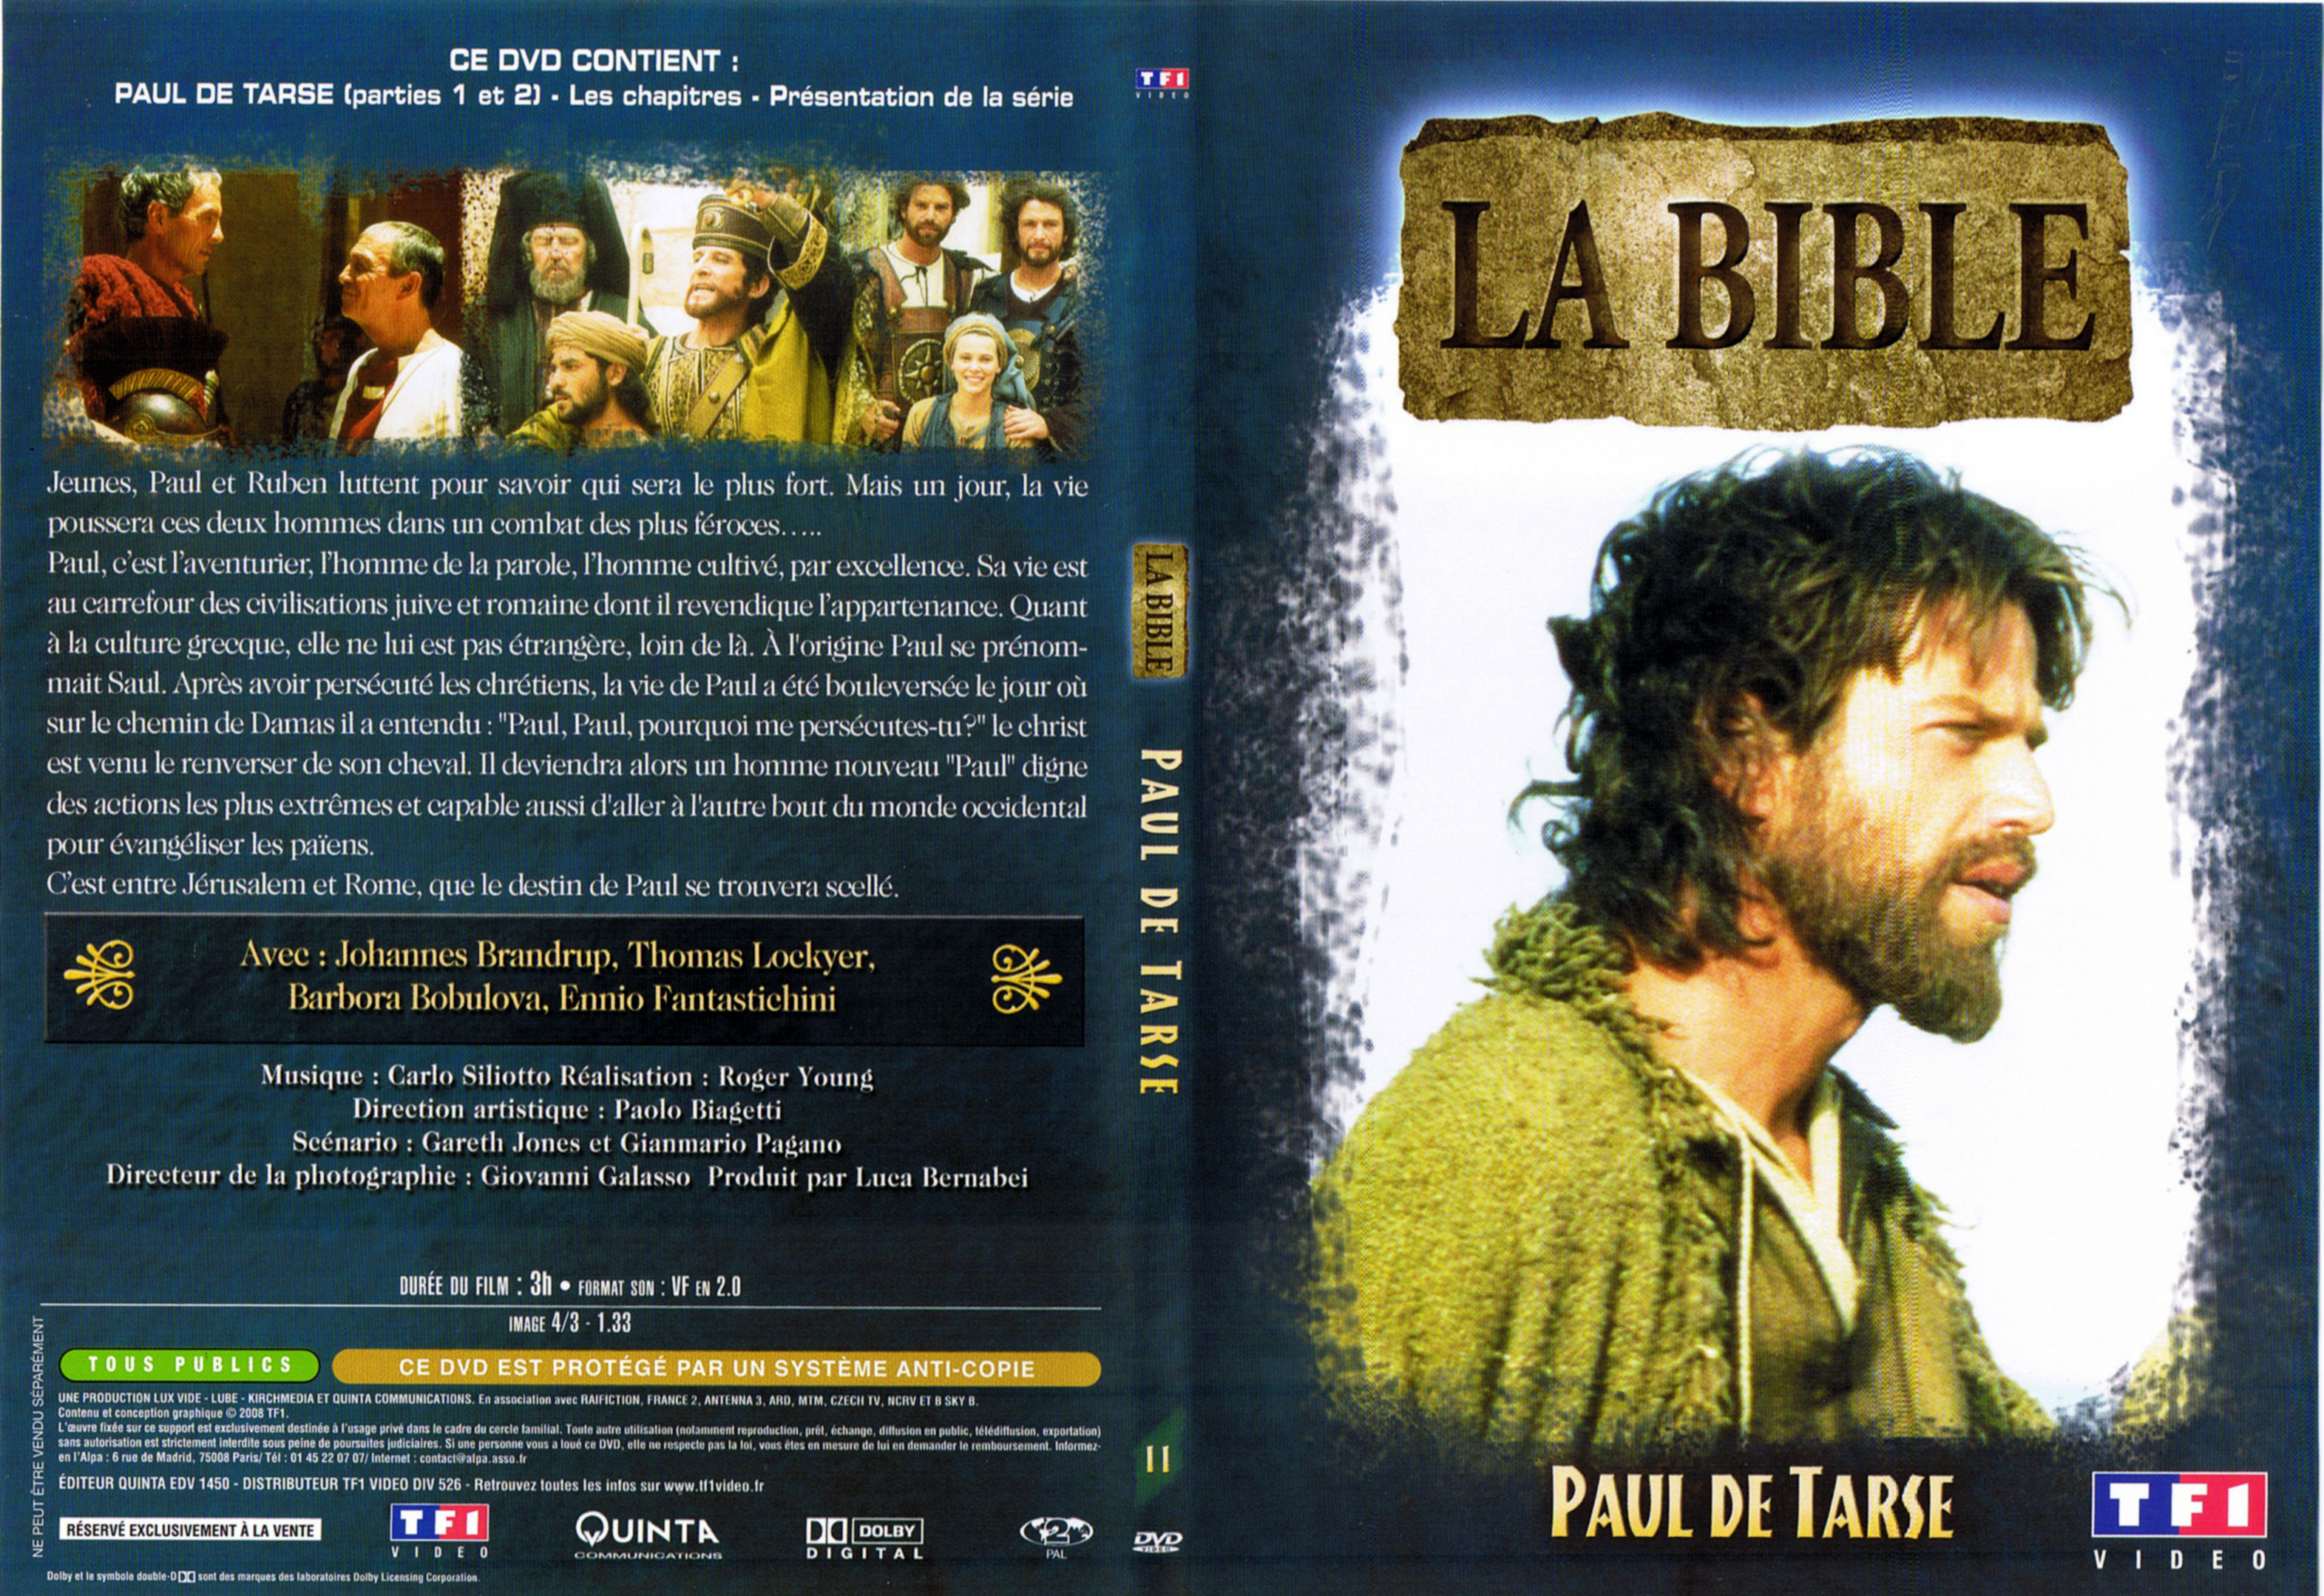 Jaquette DVD La bible - Paul de Tarse